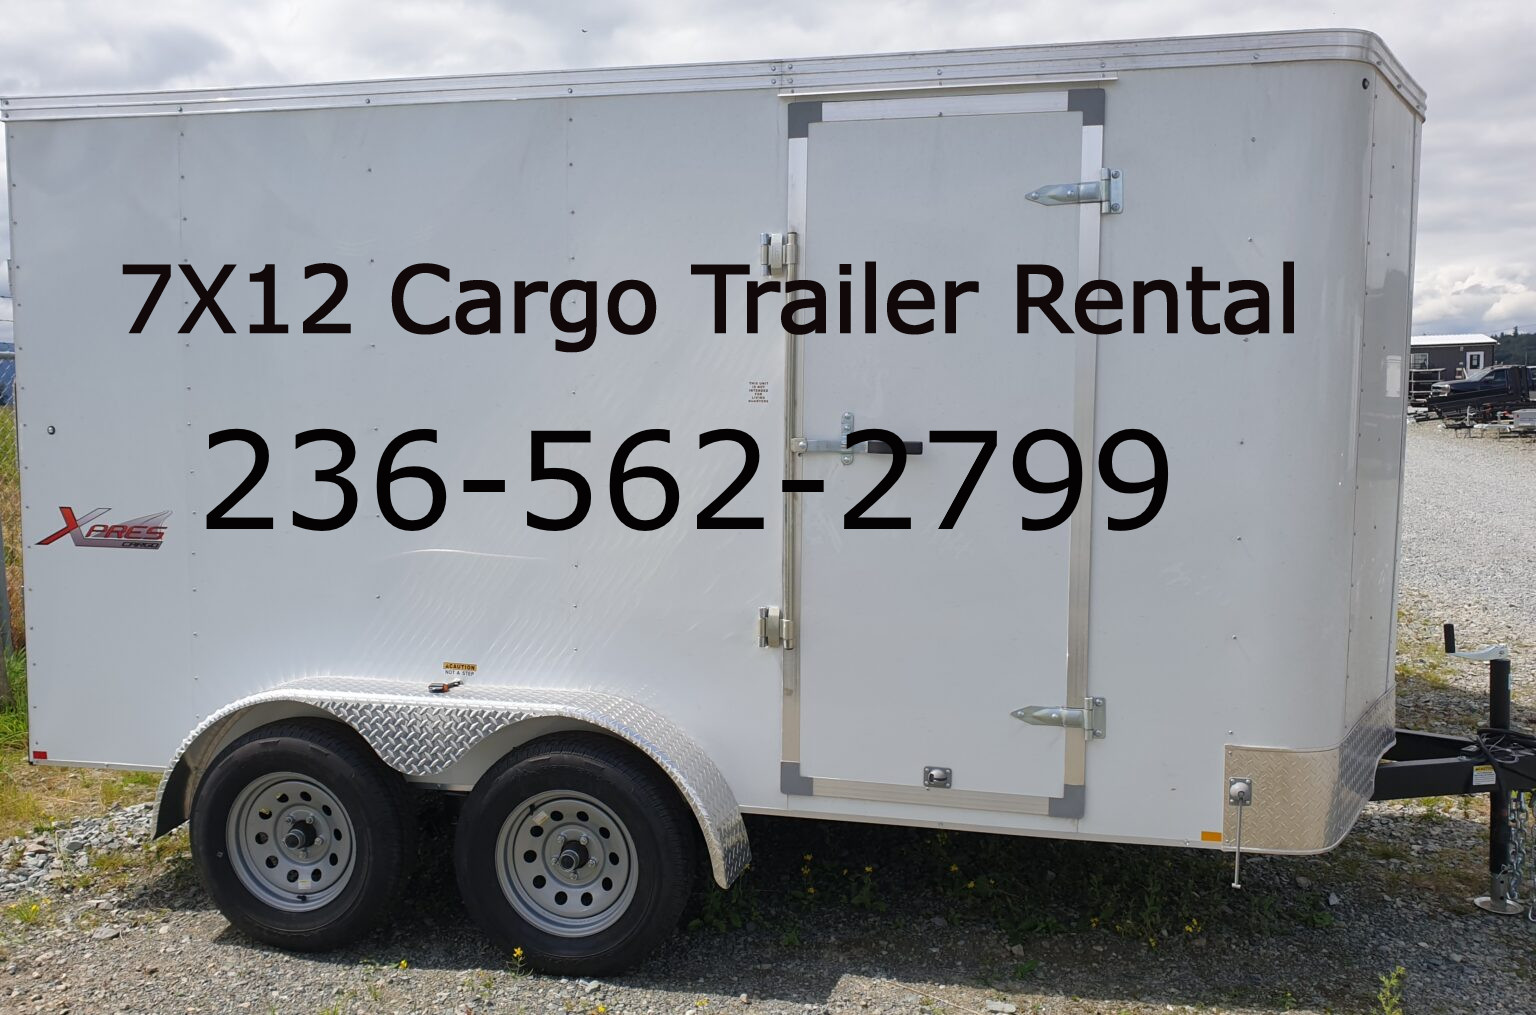 7X12 Cargo Trailer Rental